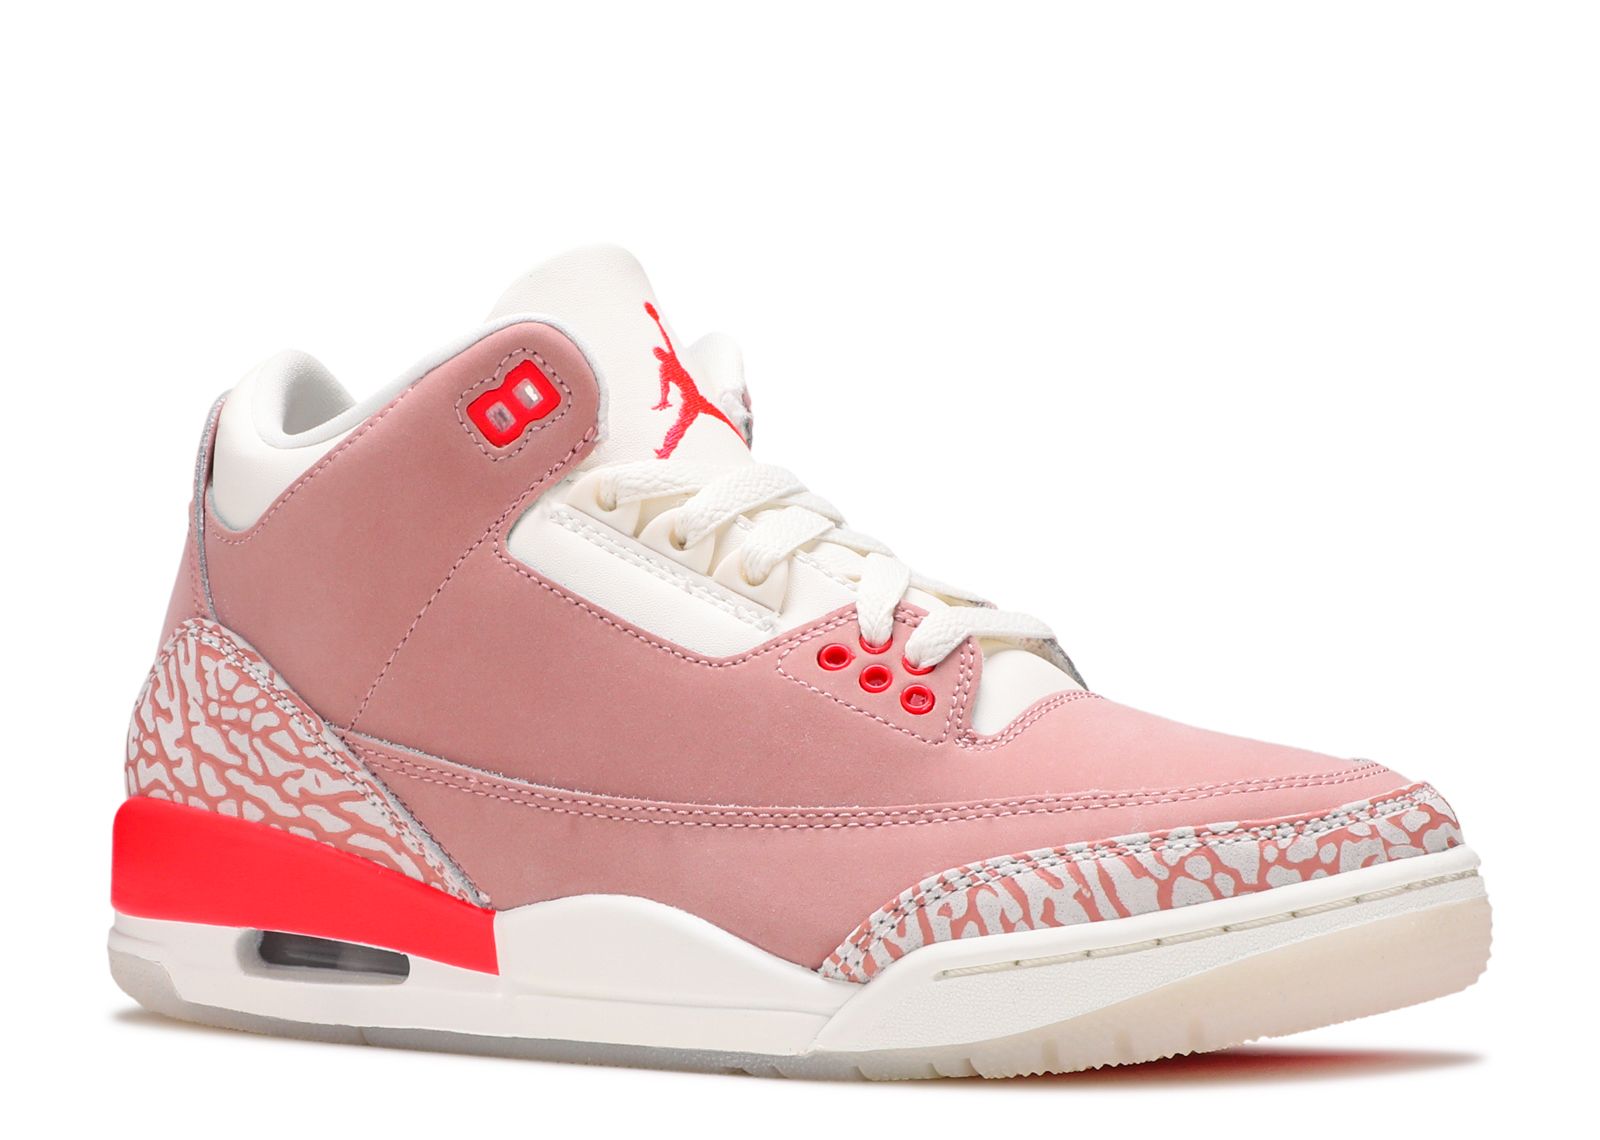 Jordan, Shoes, Special Edition Jordan 3s Pink And Tan